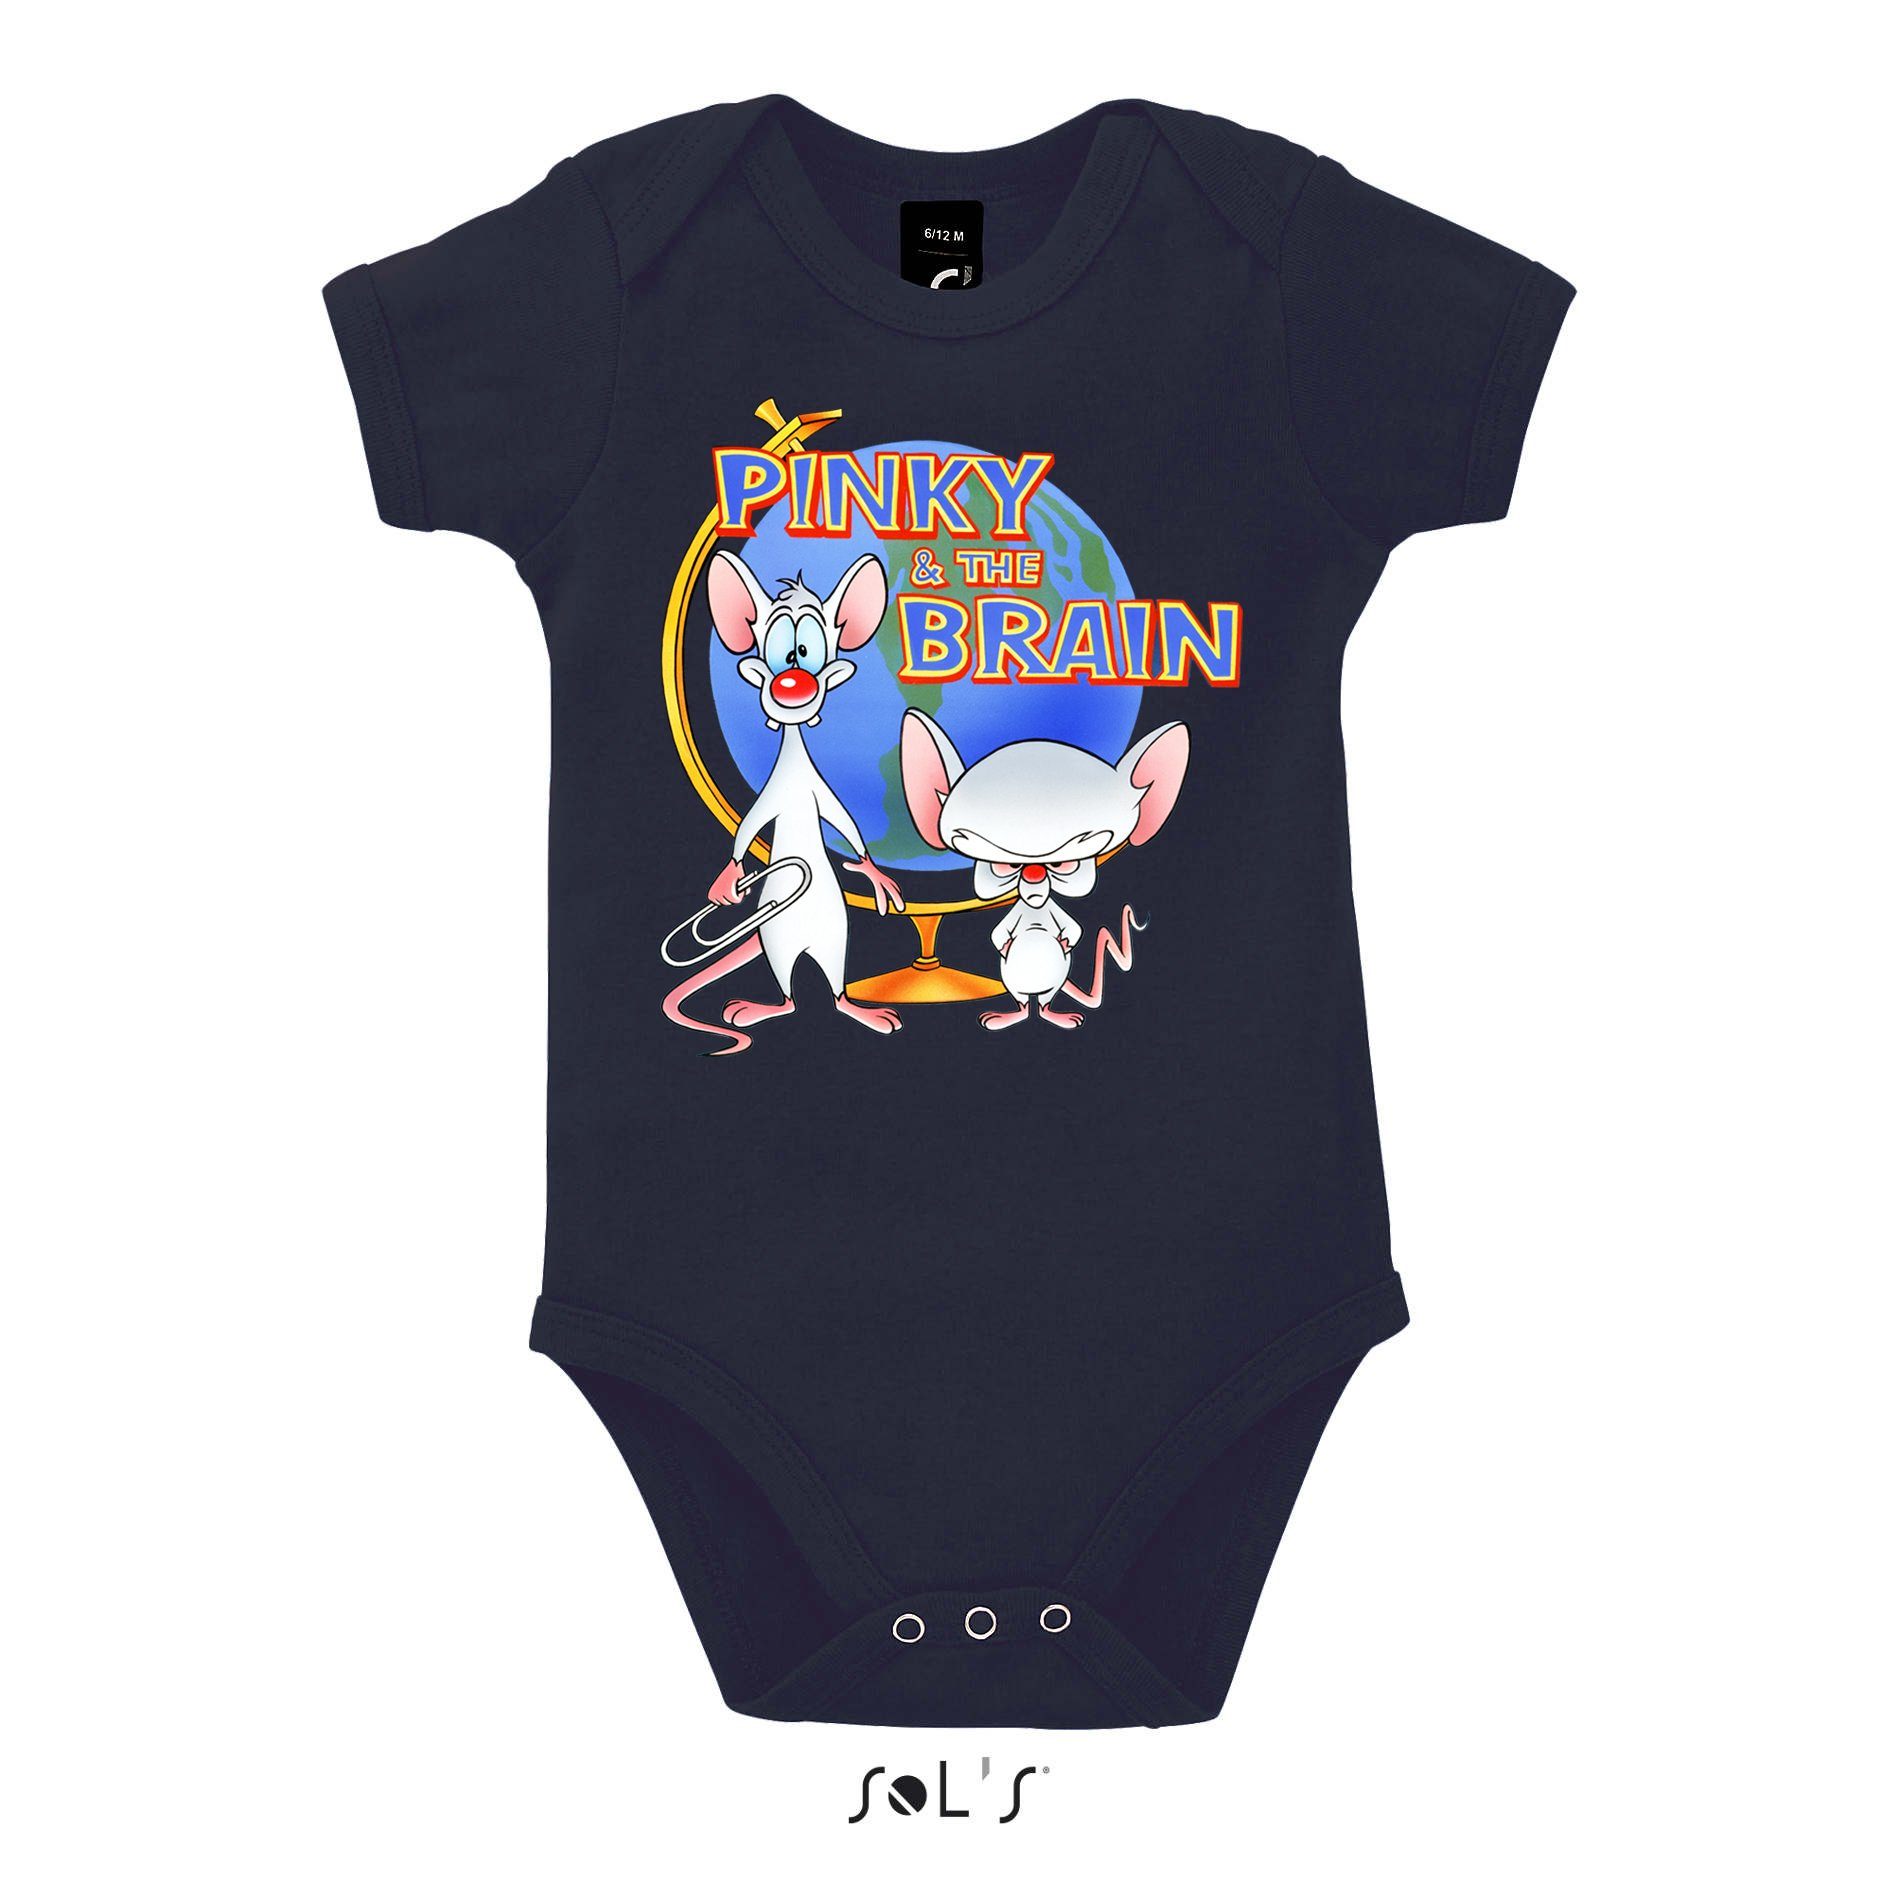 the Pinky Kinder Weltherrschaft & Blondie Brain and Comic Brownie Strampler Navyblau Baby Cartoon